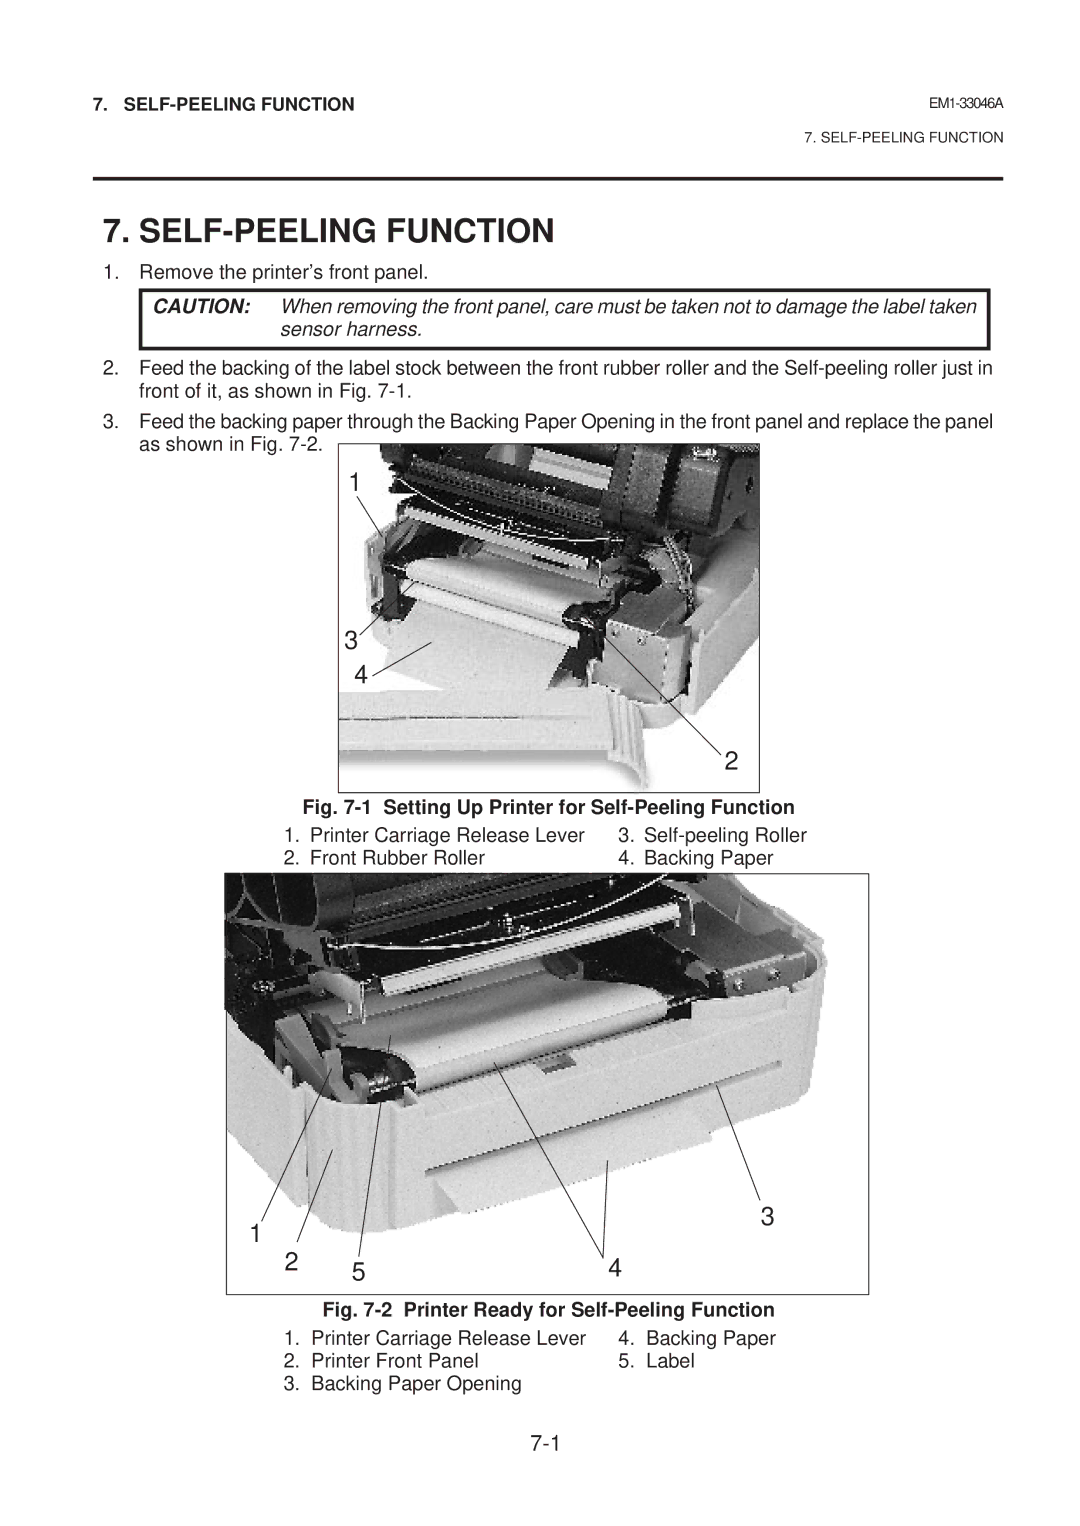 Toshiba EM1-33046AE, B-442-QP owner manual SELF-PEELING Function, Setting Up Printer for Self-Peeling Function 